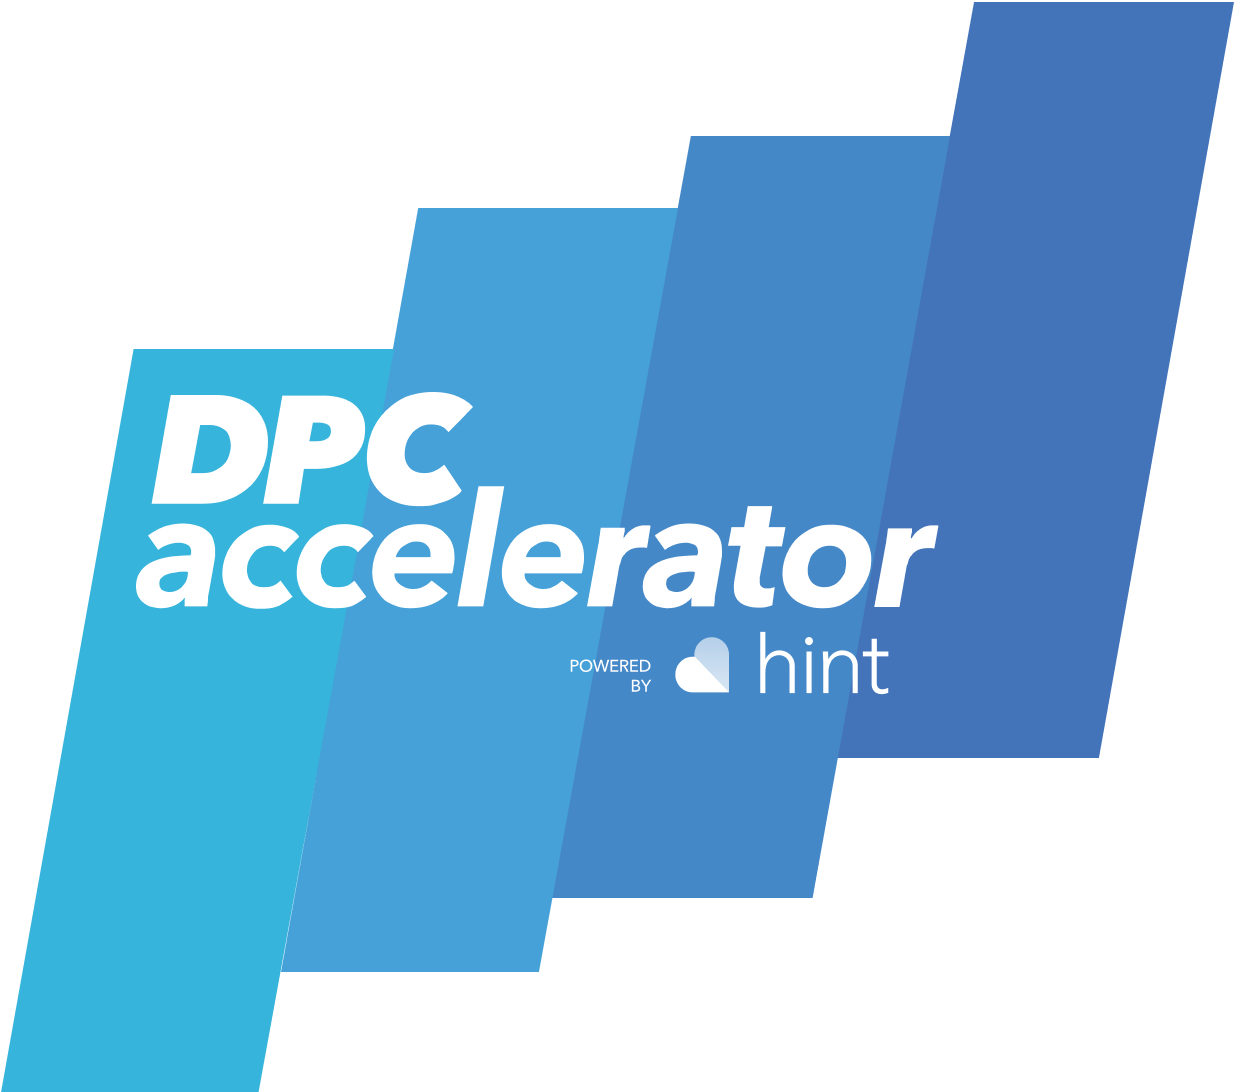 DPCaccelerator